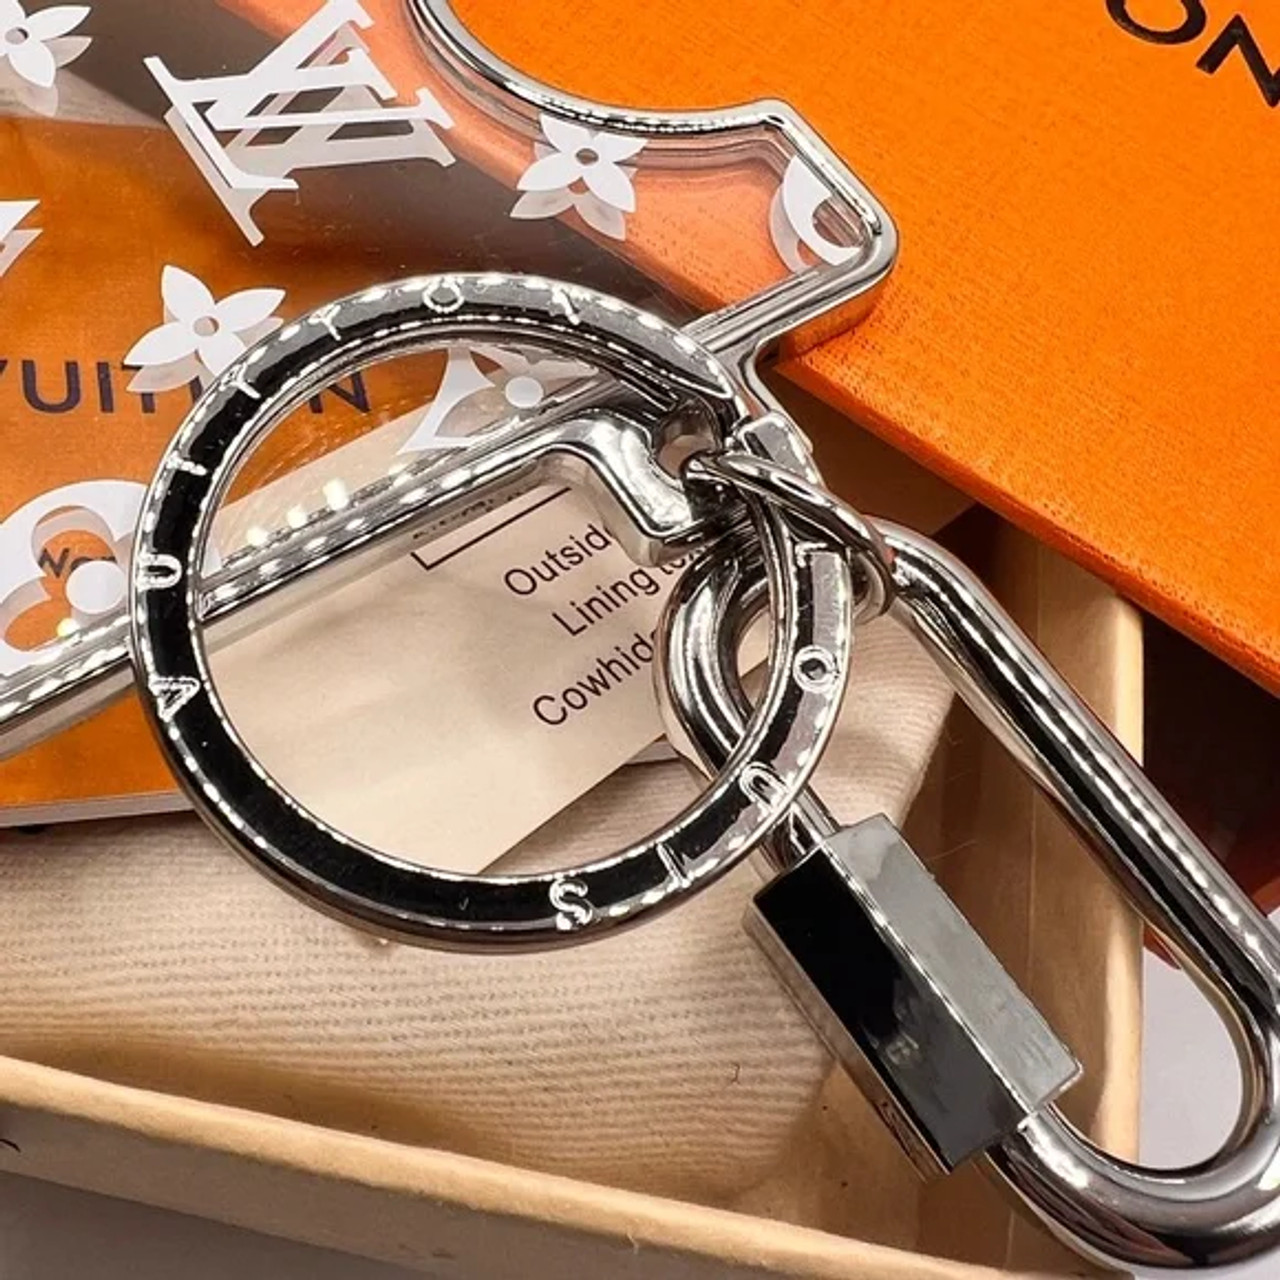 Shop Louis Vuitton 2020-21FW Lv prism id holder bag charm and key